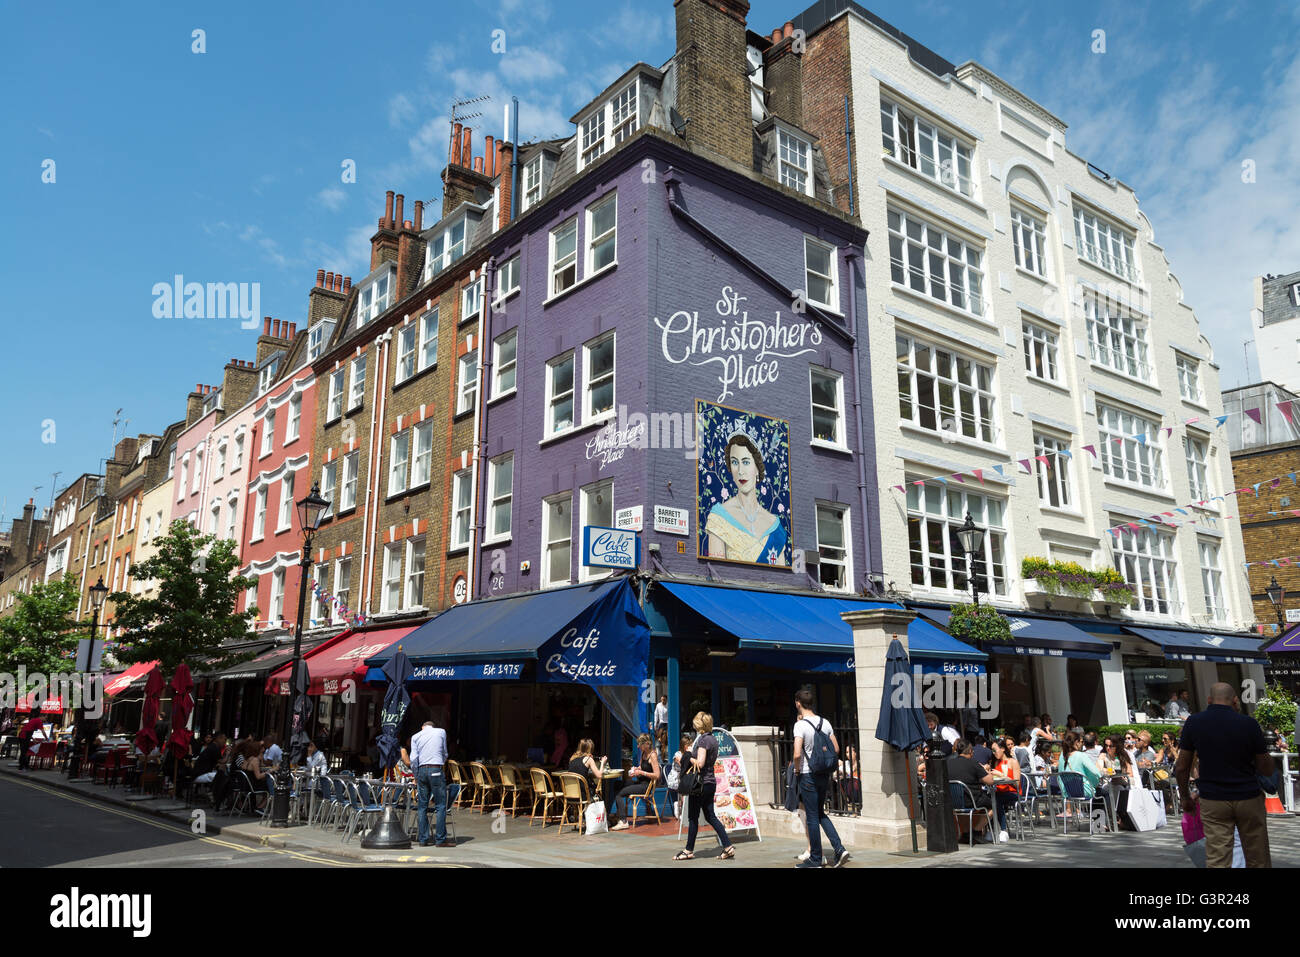 St Christopher's Place, London, England, UK Stock Photo